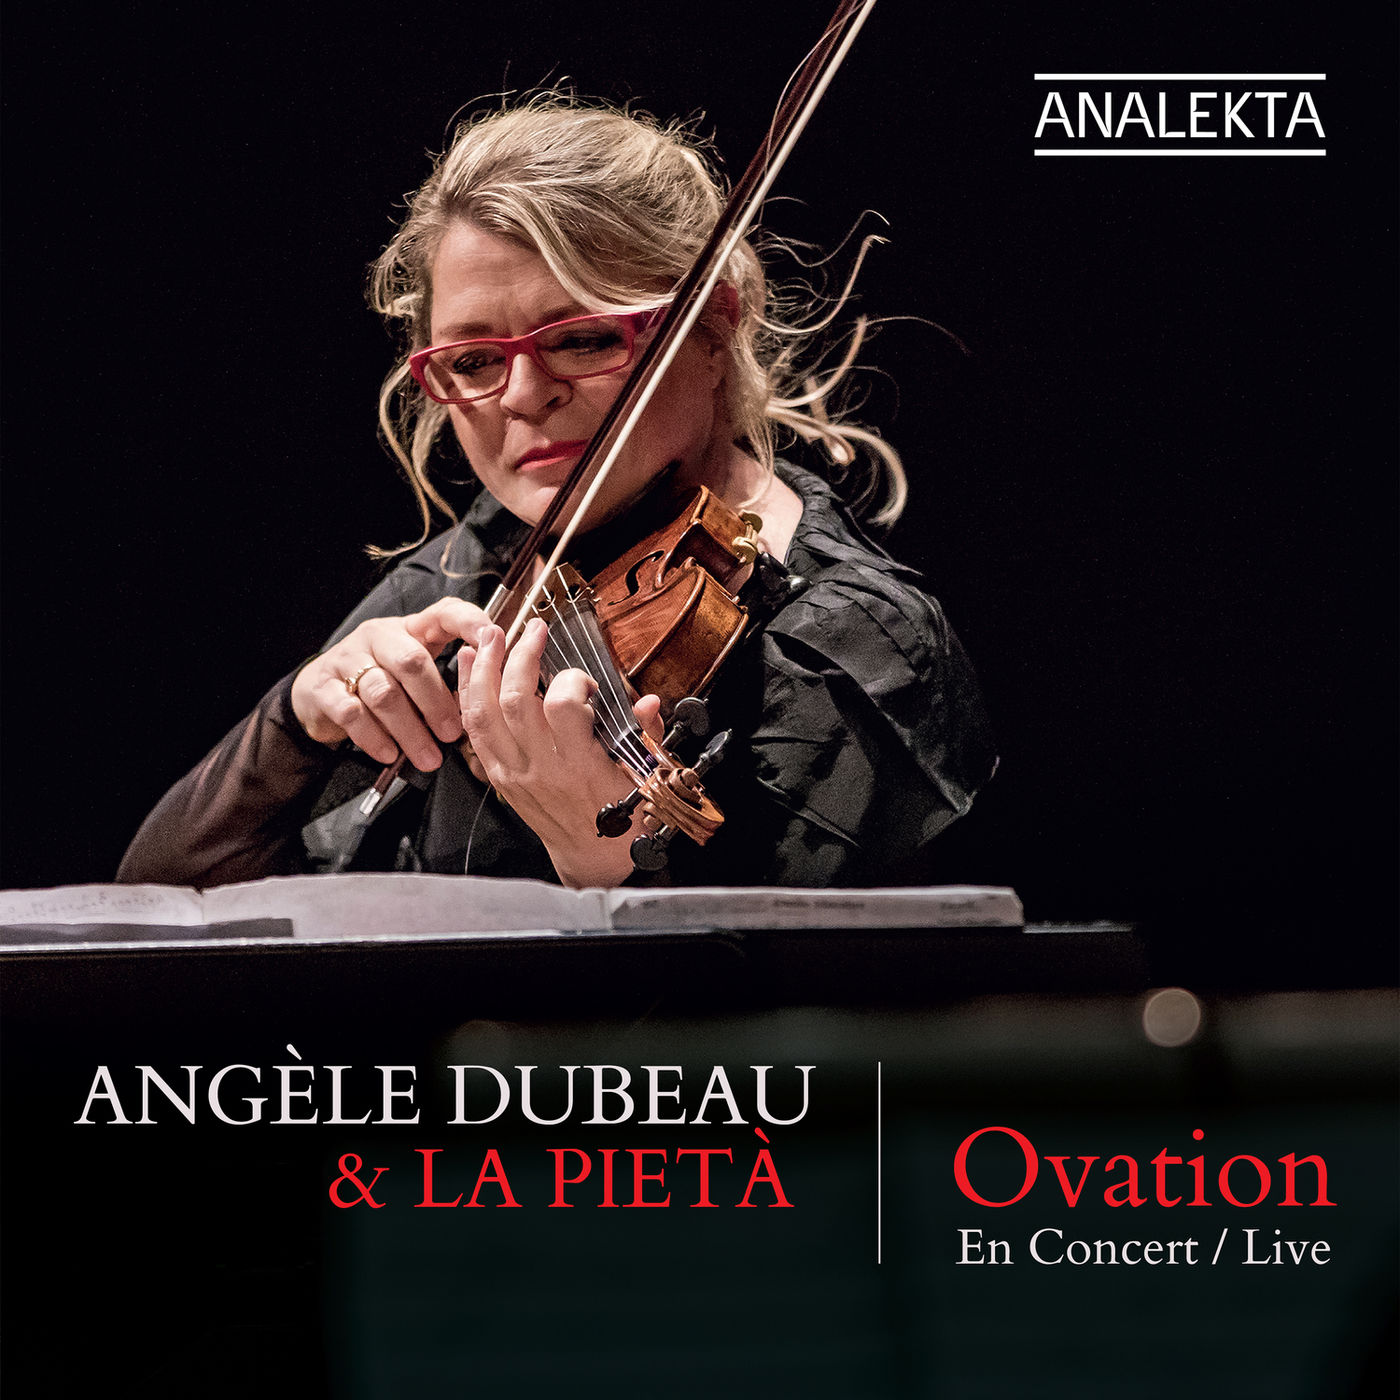 Angele Dubeau & La Pieta - Ovation (2018) [FLAC 24bit/48kHz]